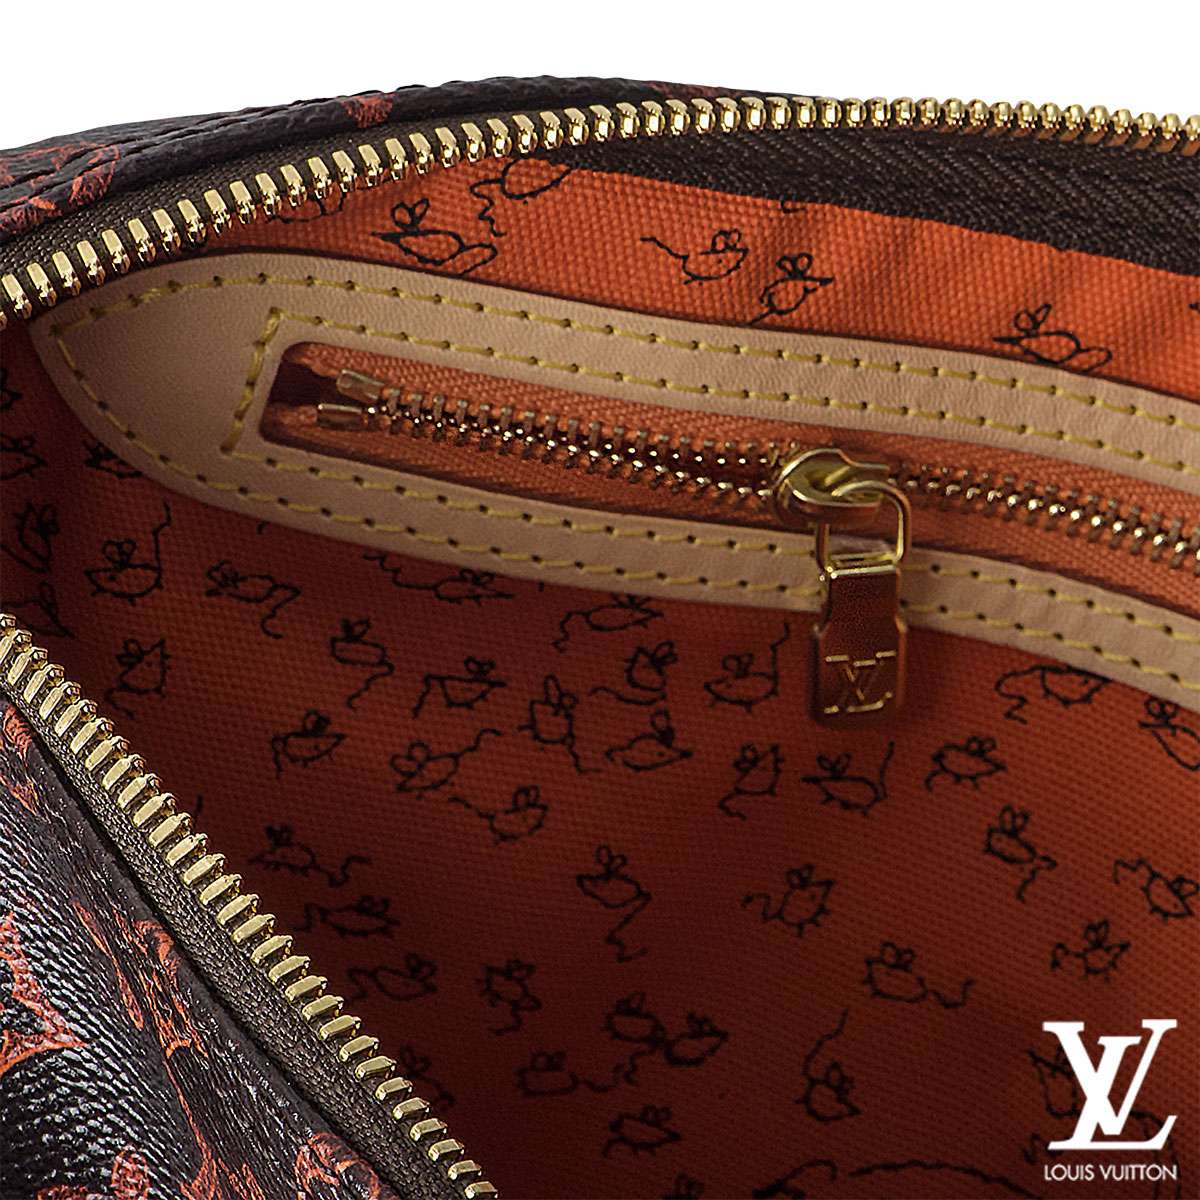 Louis Vuitton Ltd. Ed. grace Coddington Catogram Speedy